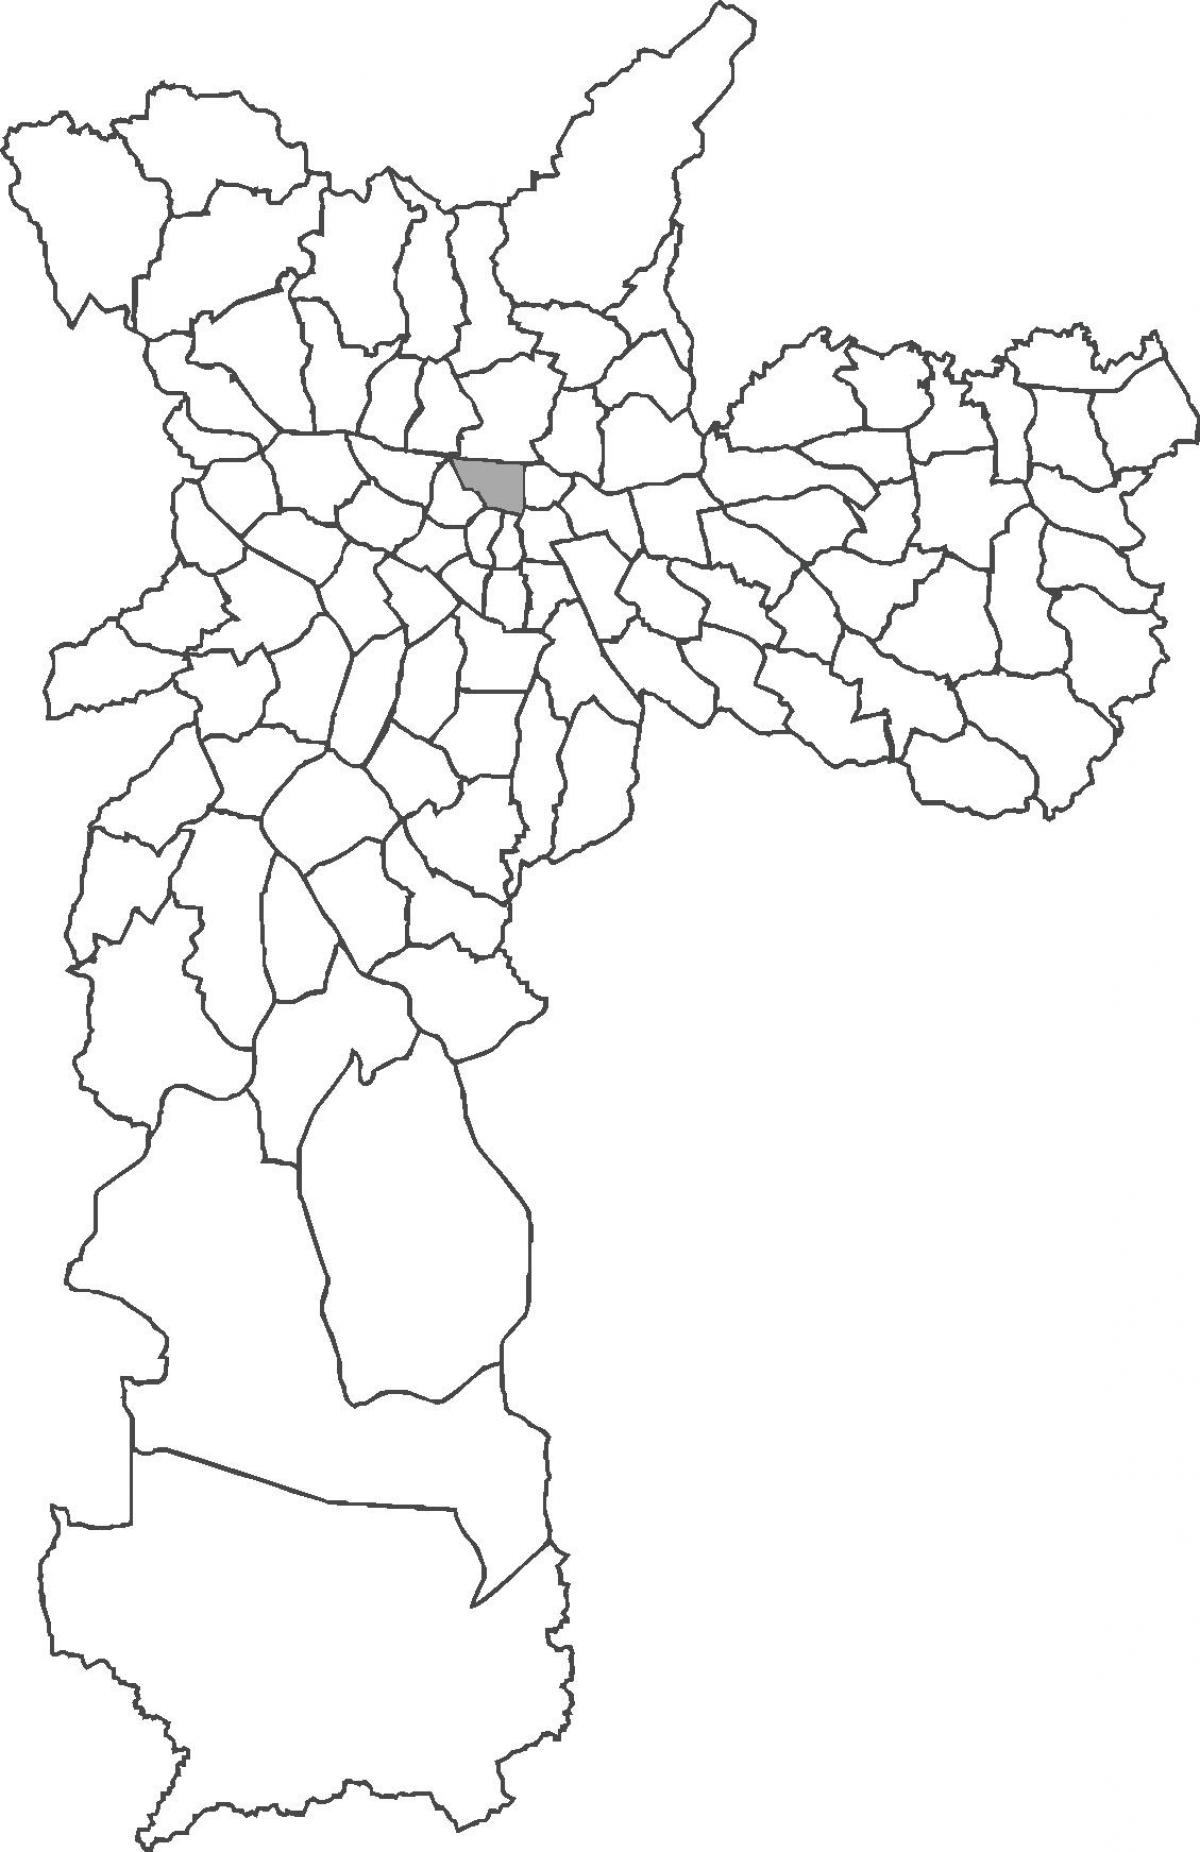 Karte von Bom Retiro Bezirk